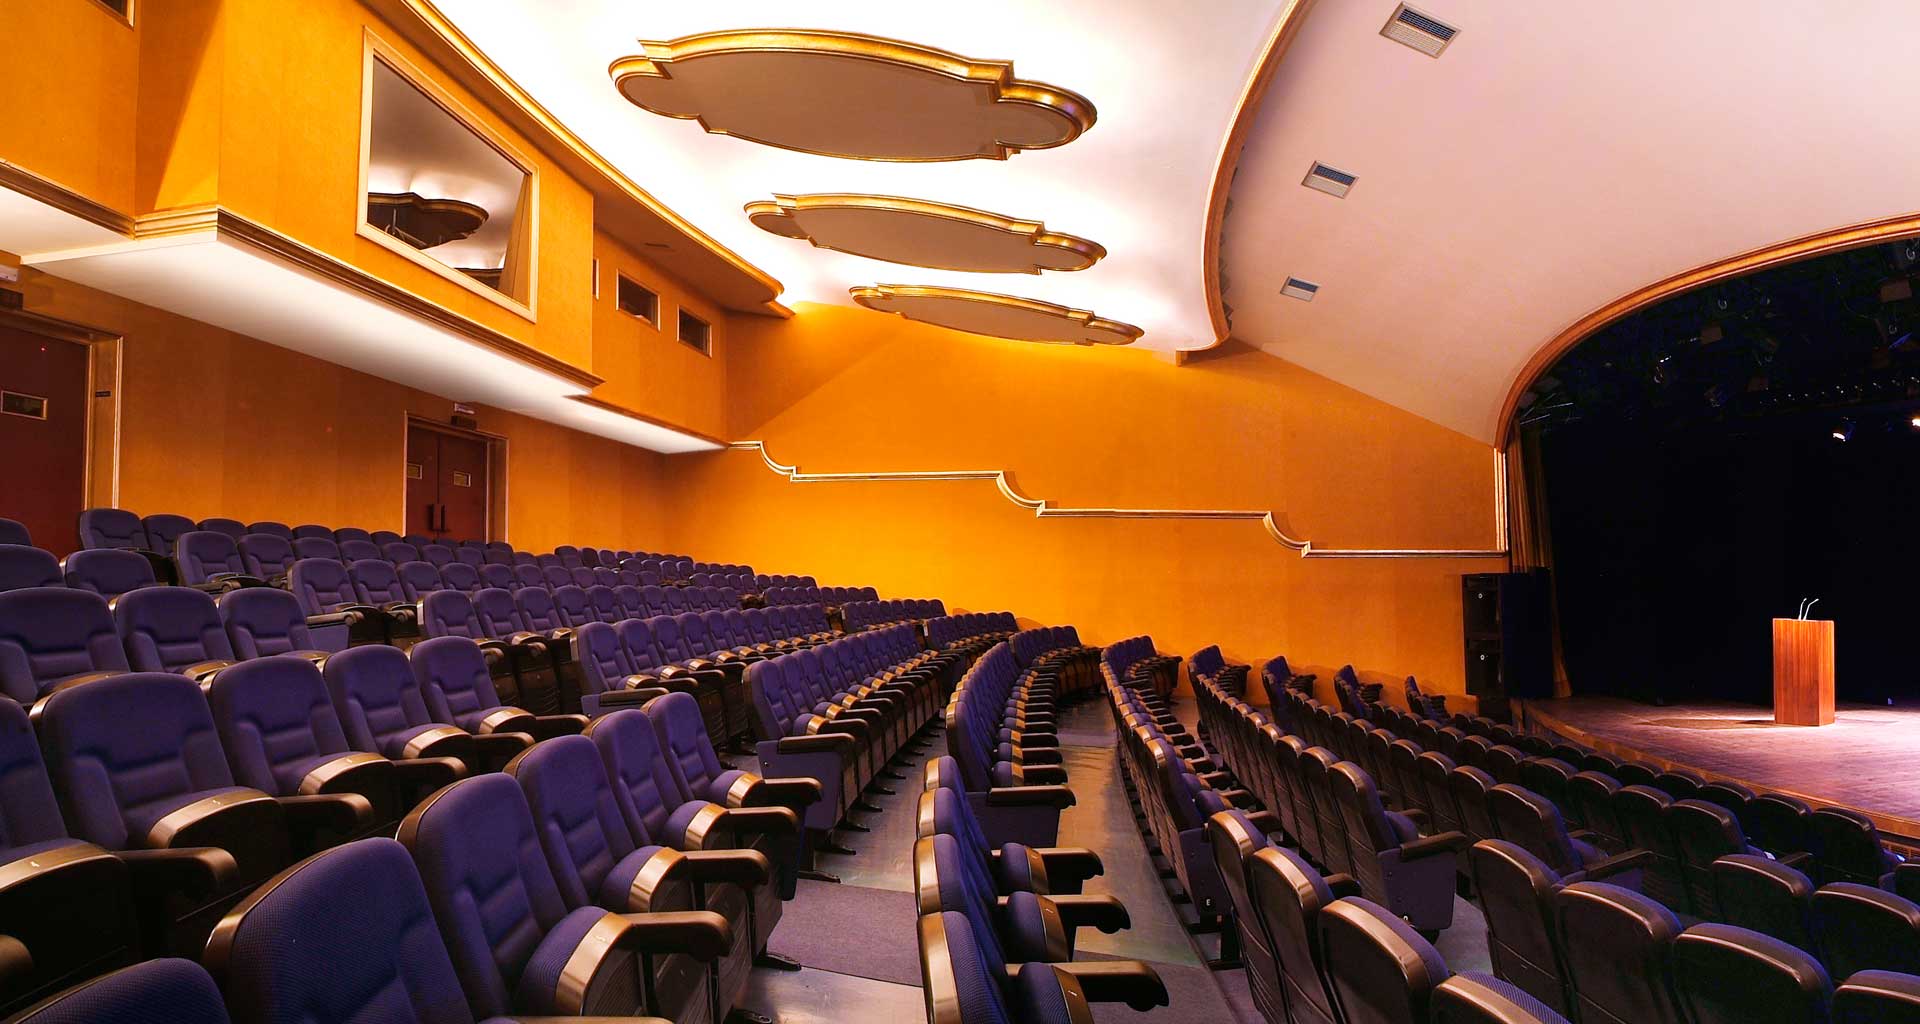 Sala Mozart del Palacio de Congresos Auditorium de Palma de Mallorca